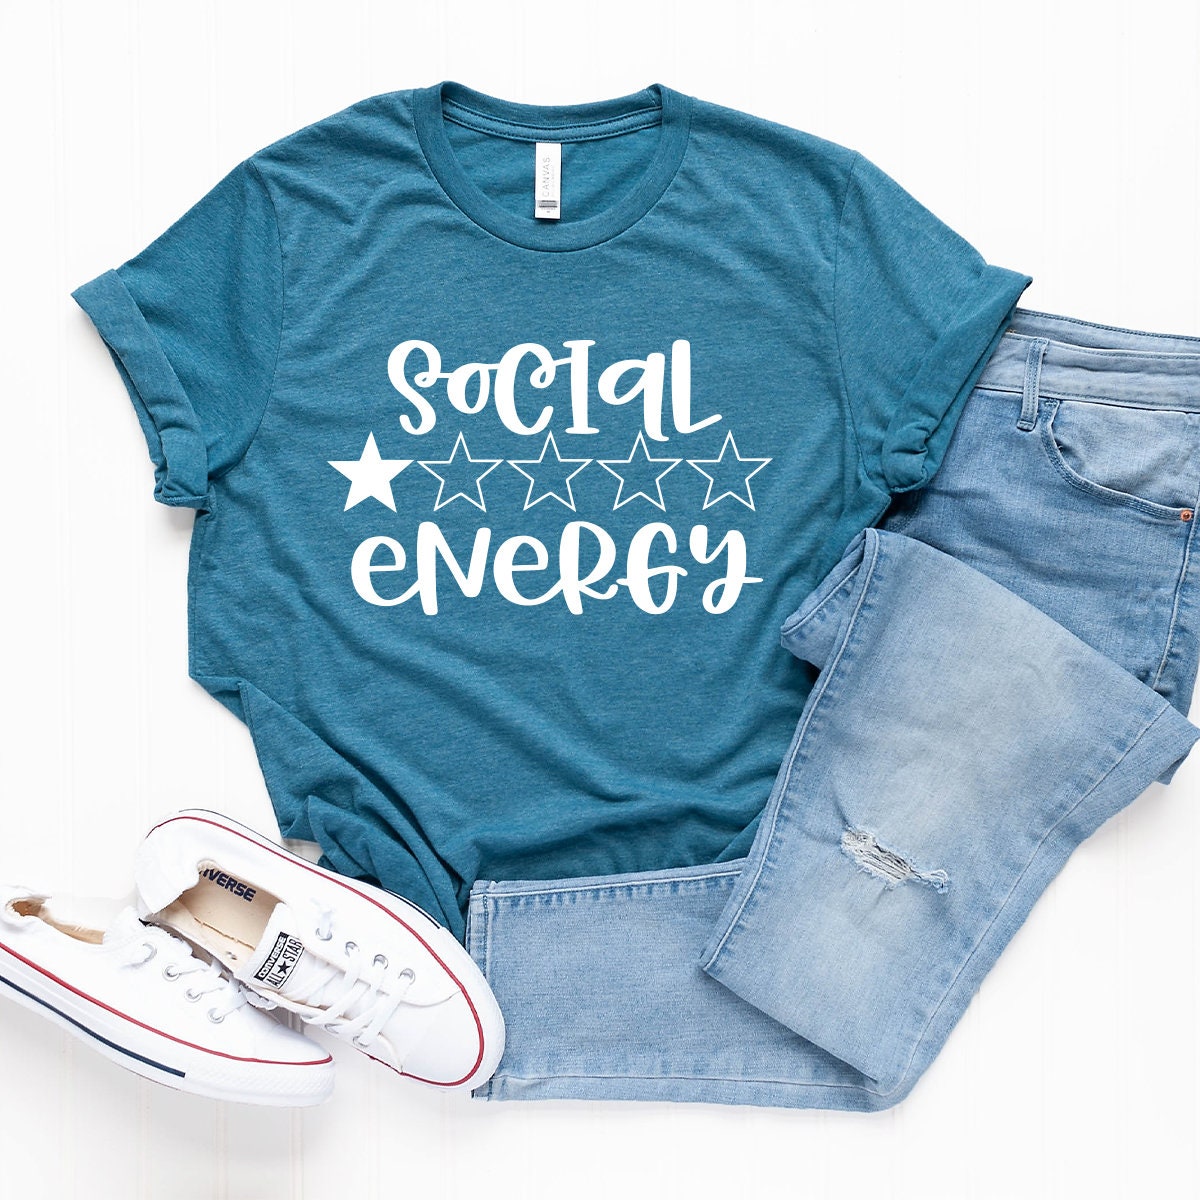 Introvert T Shirt, Low Social Energy T Shirt, Funny Quarantine Shirt, Funny Introverted Shirt, Social Energy T Shirt, Socially Awkward Shirt - Fastdeliverytees.com